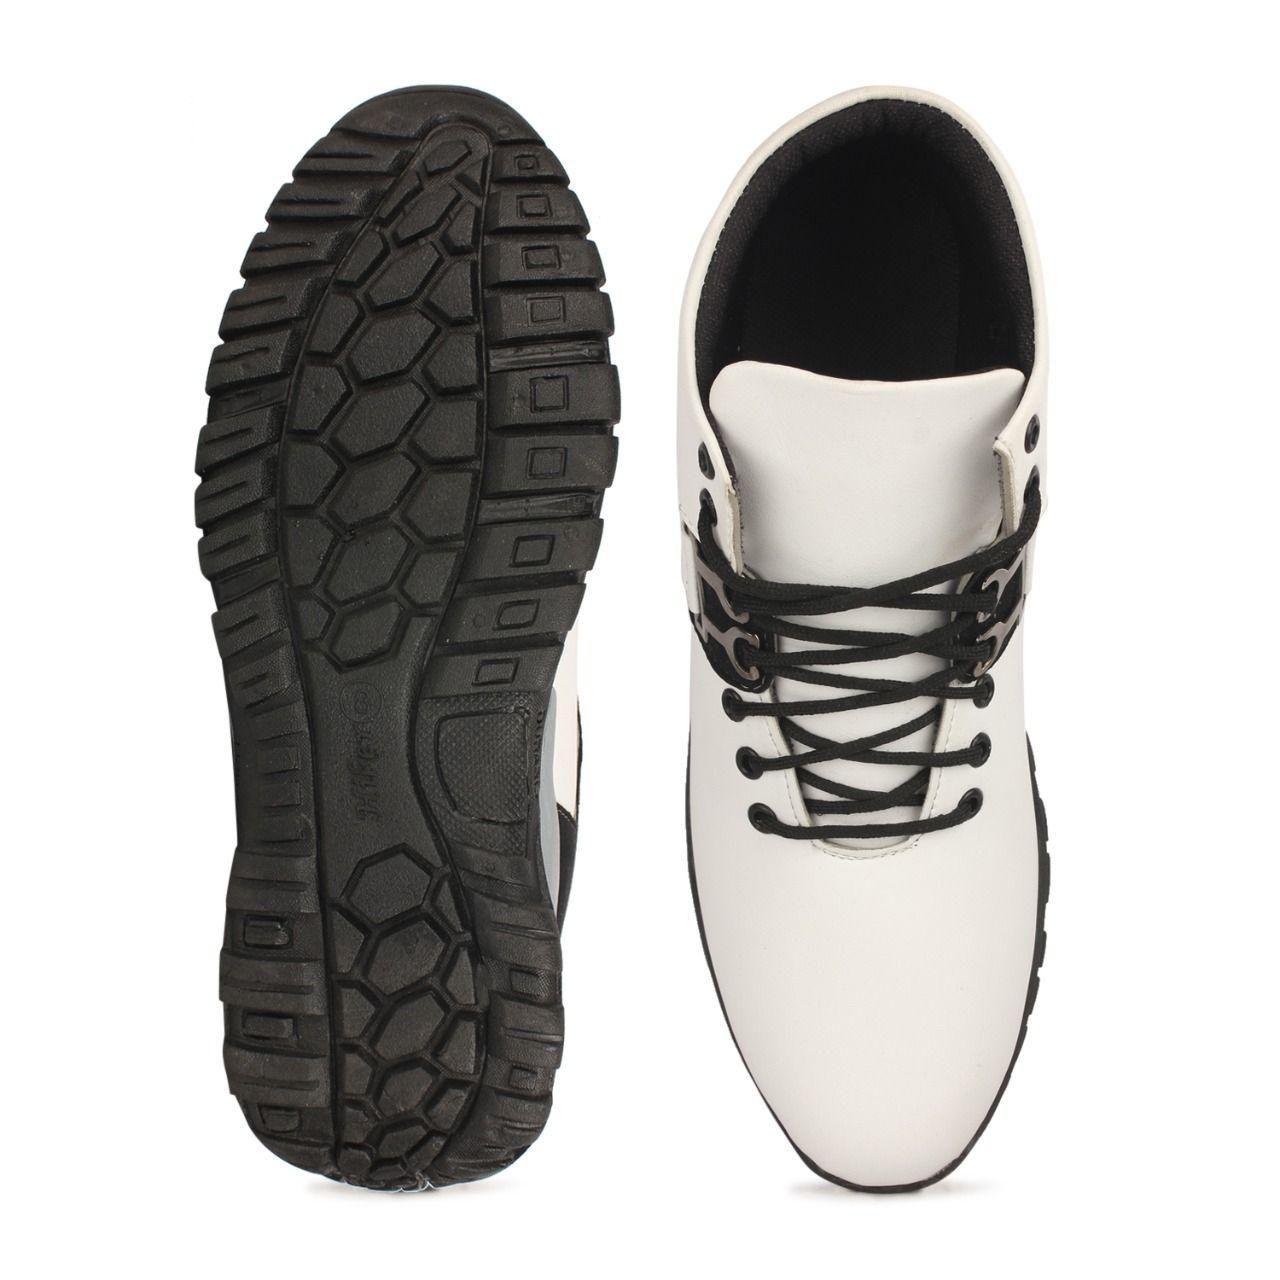 Monex New Latest White Shoes For Mens